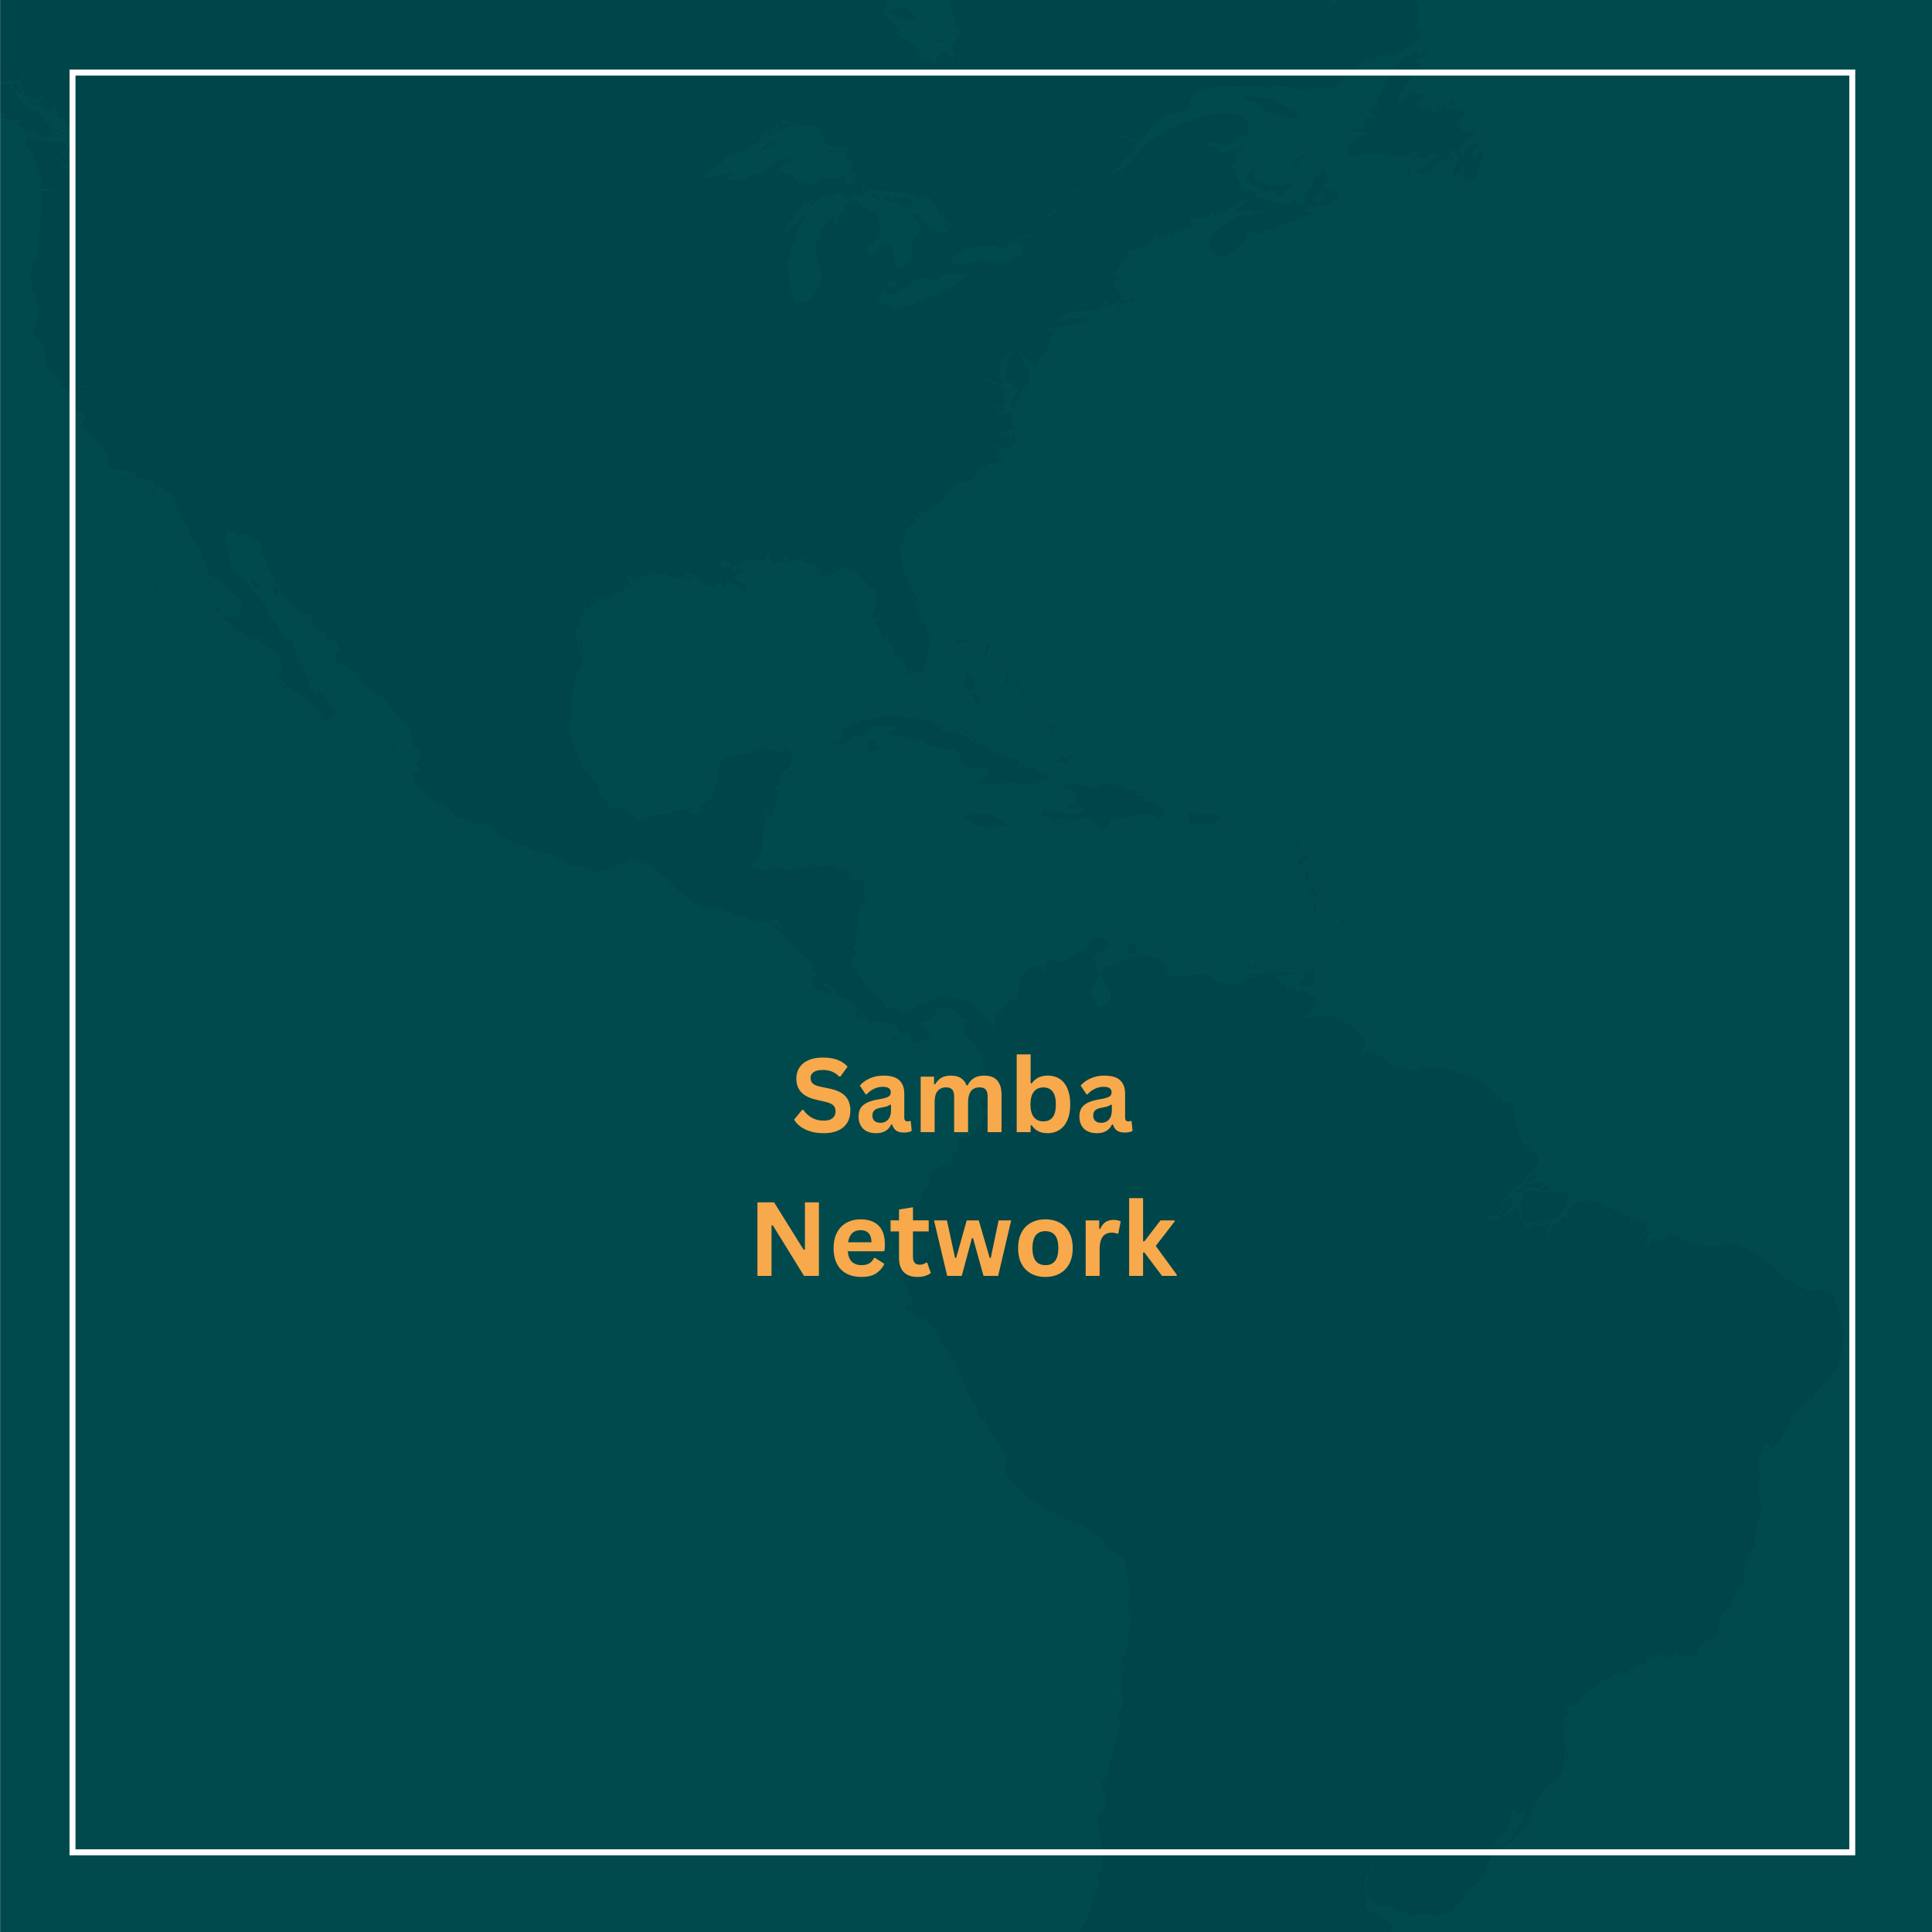 Samba Network